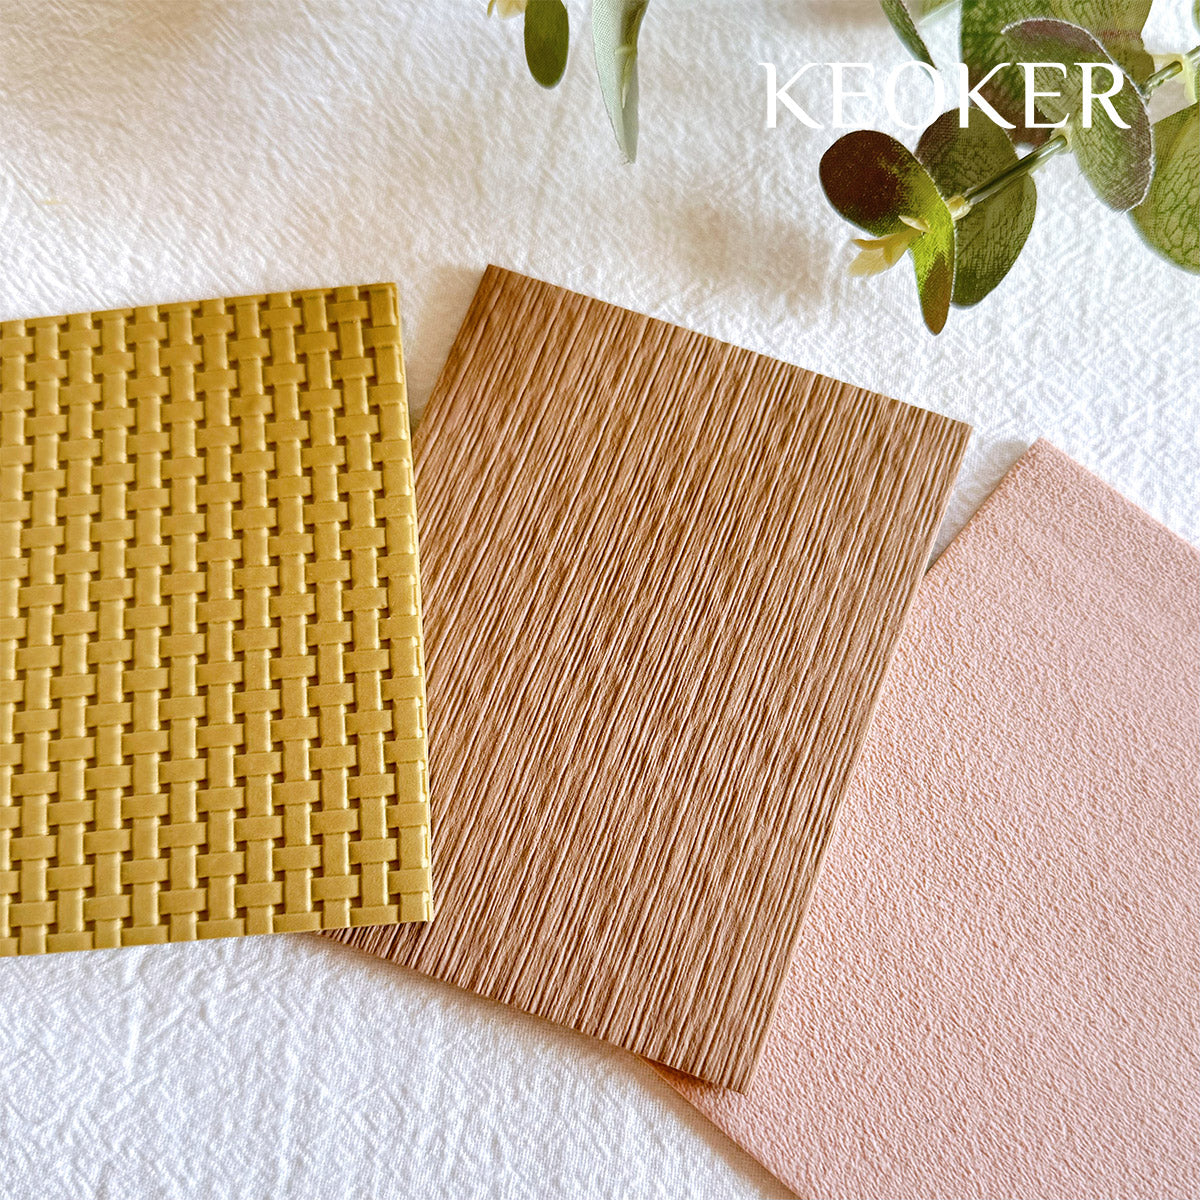 KEOKER Polymer Clay Texture Roller (Sandpaper Texture)